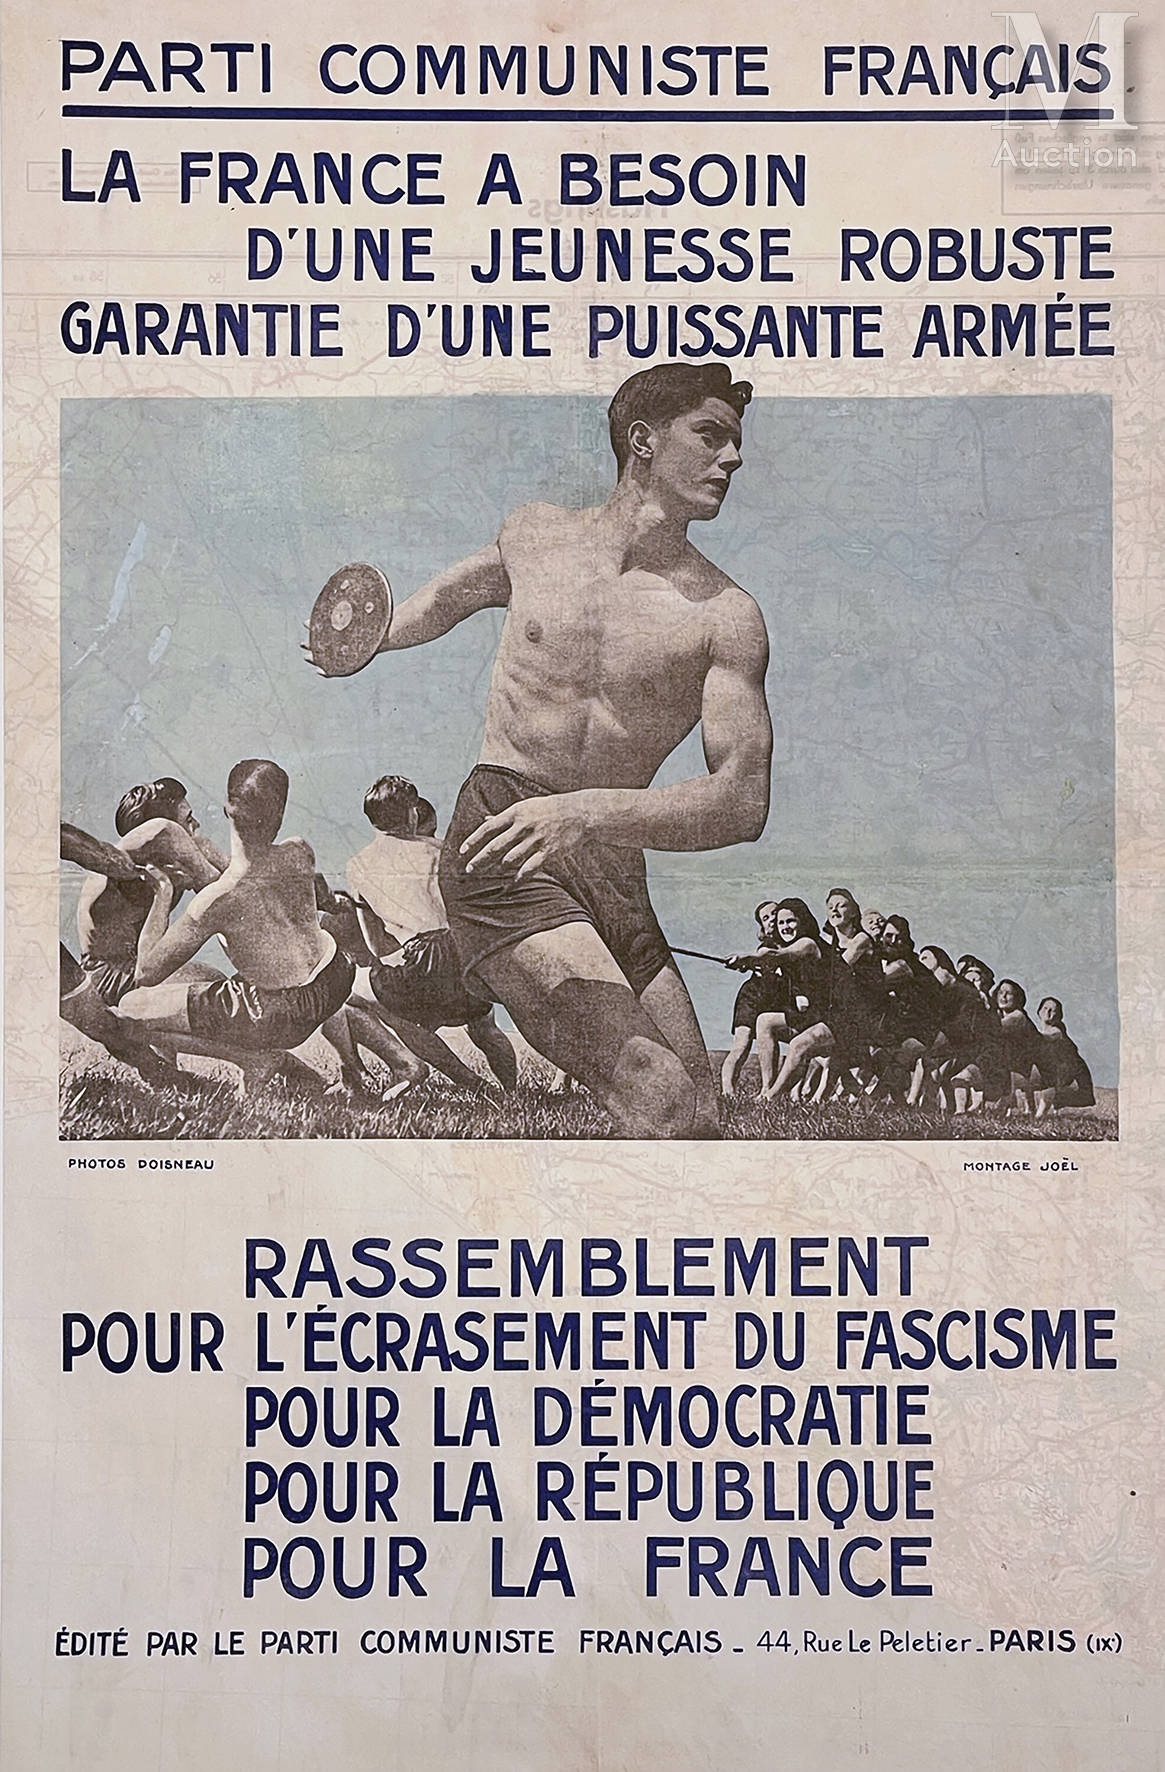 Parti Communiste Français by Robert Doisneau, vers 1950